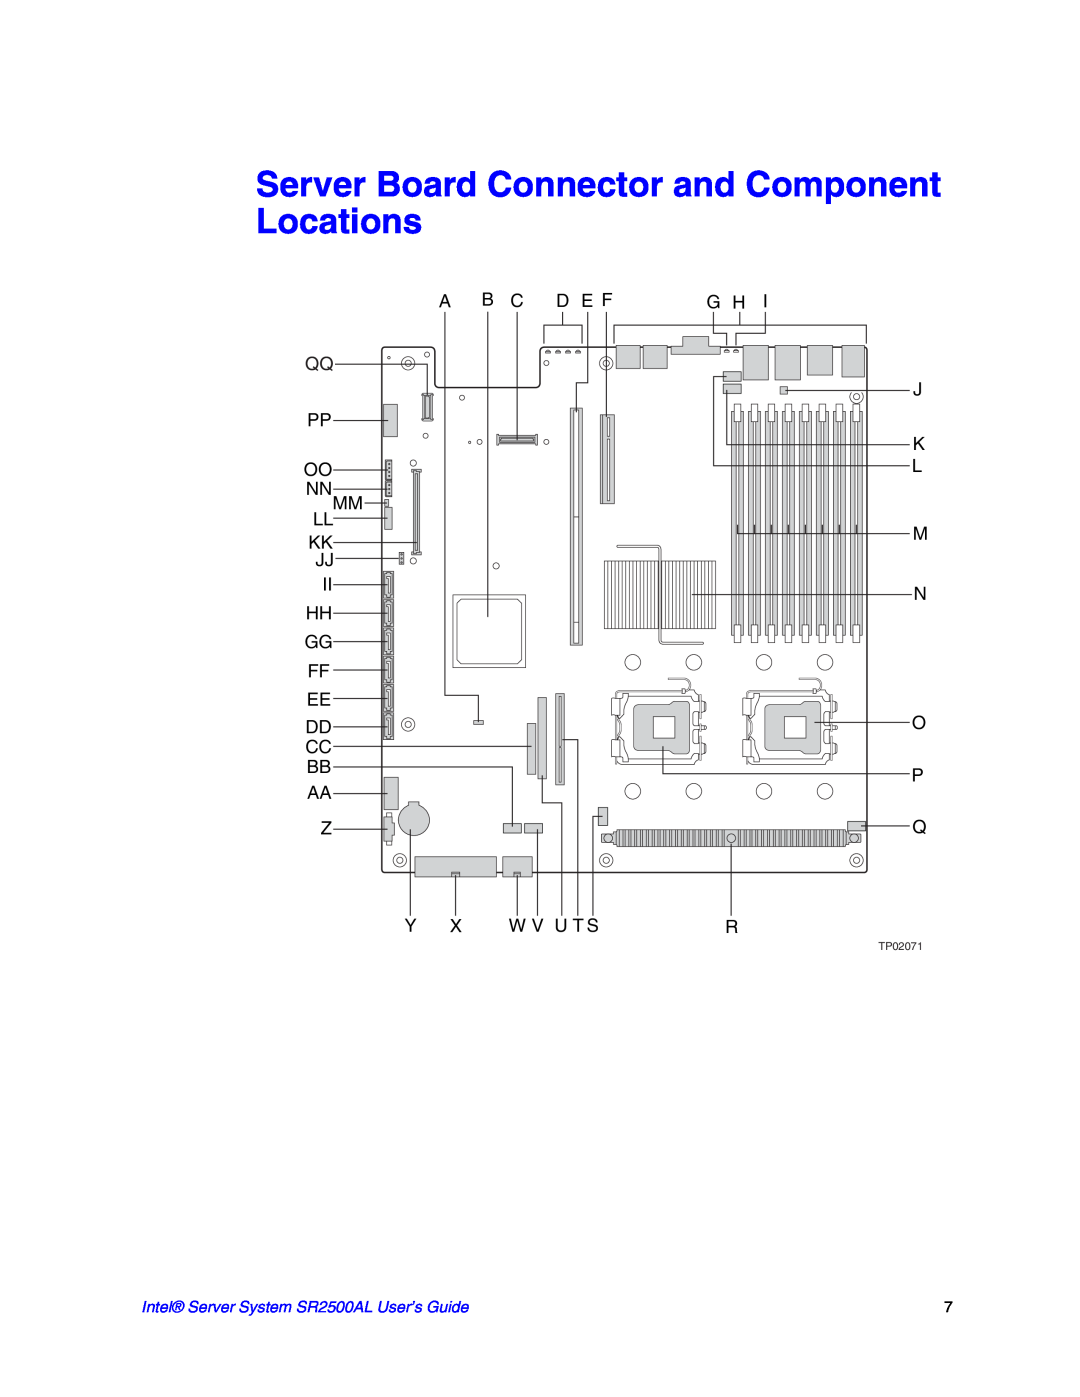 Intel SR2500AL manual Server Board Connector and Component Locations, J K L M N O P Q, Y X W V U T Sr 